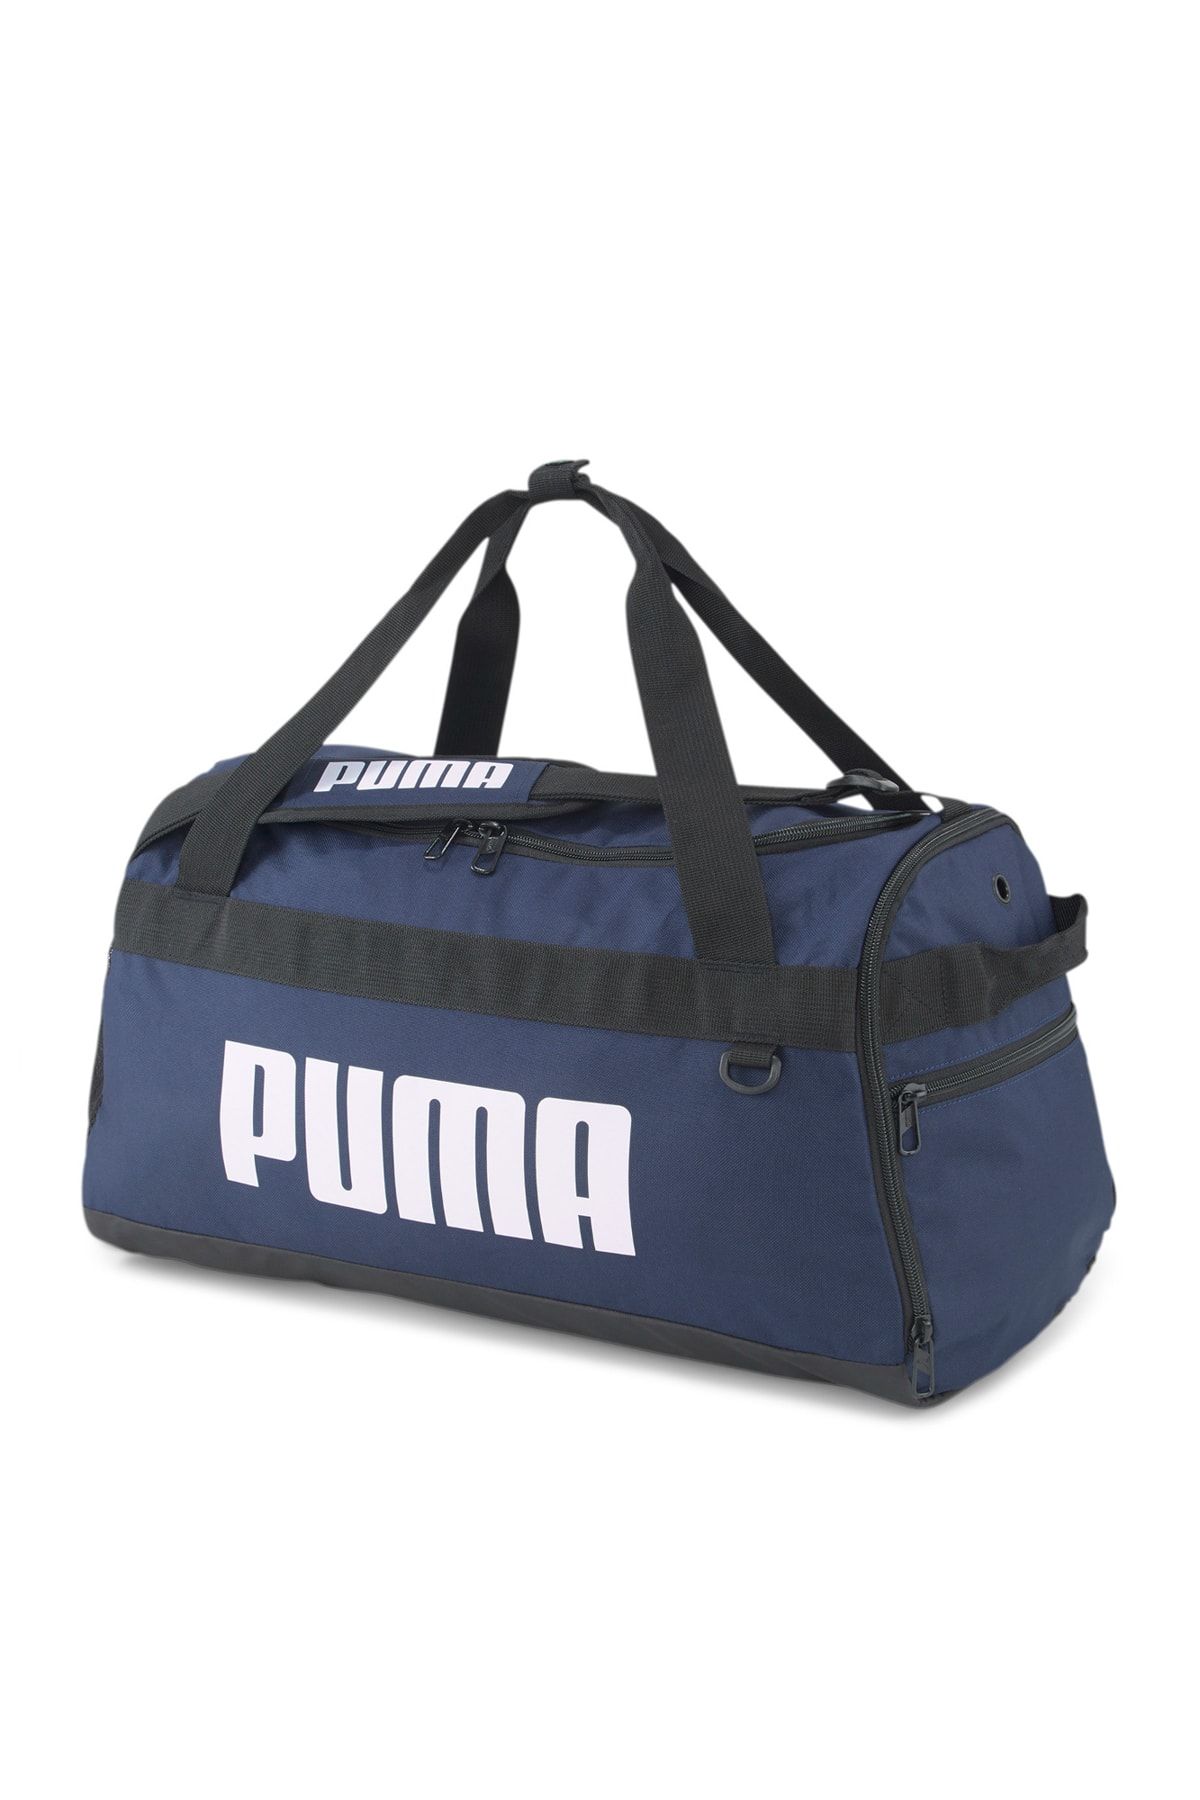 Puma Challenger Duffel Bag S07953002